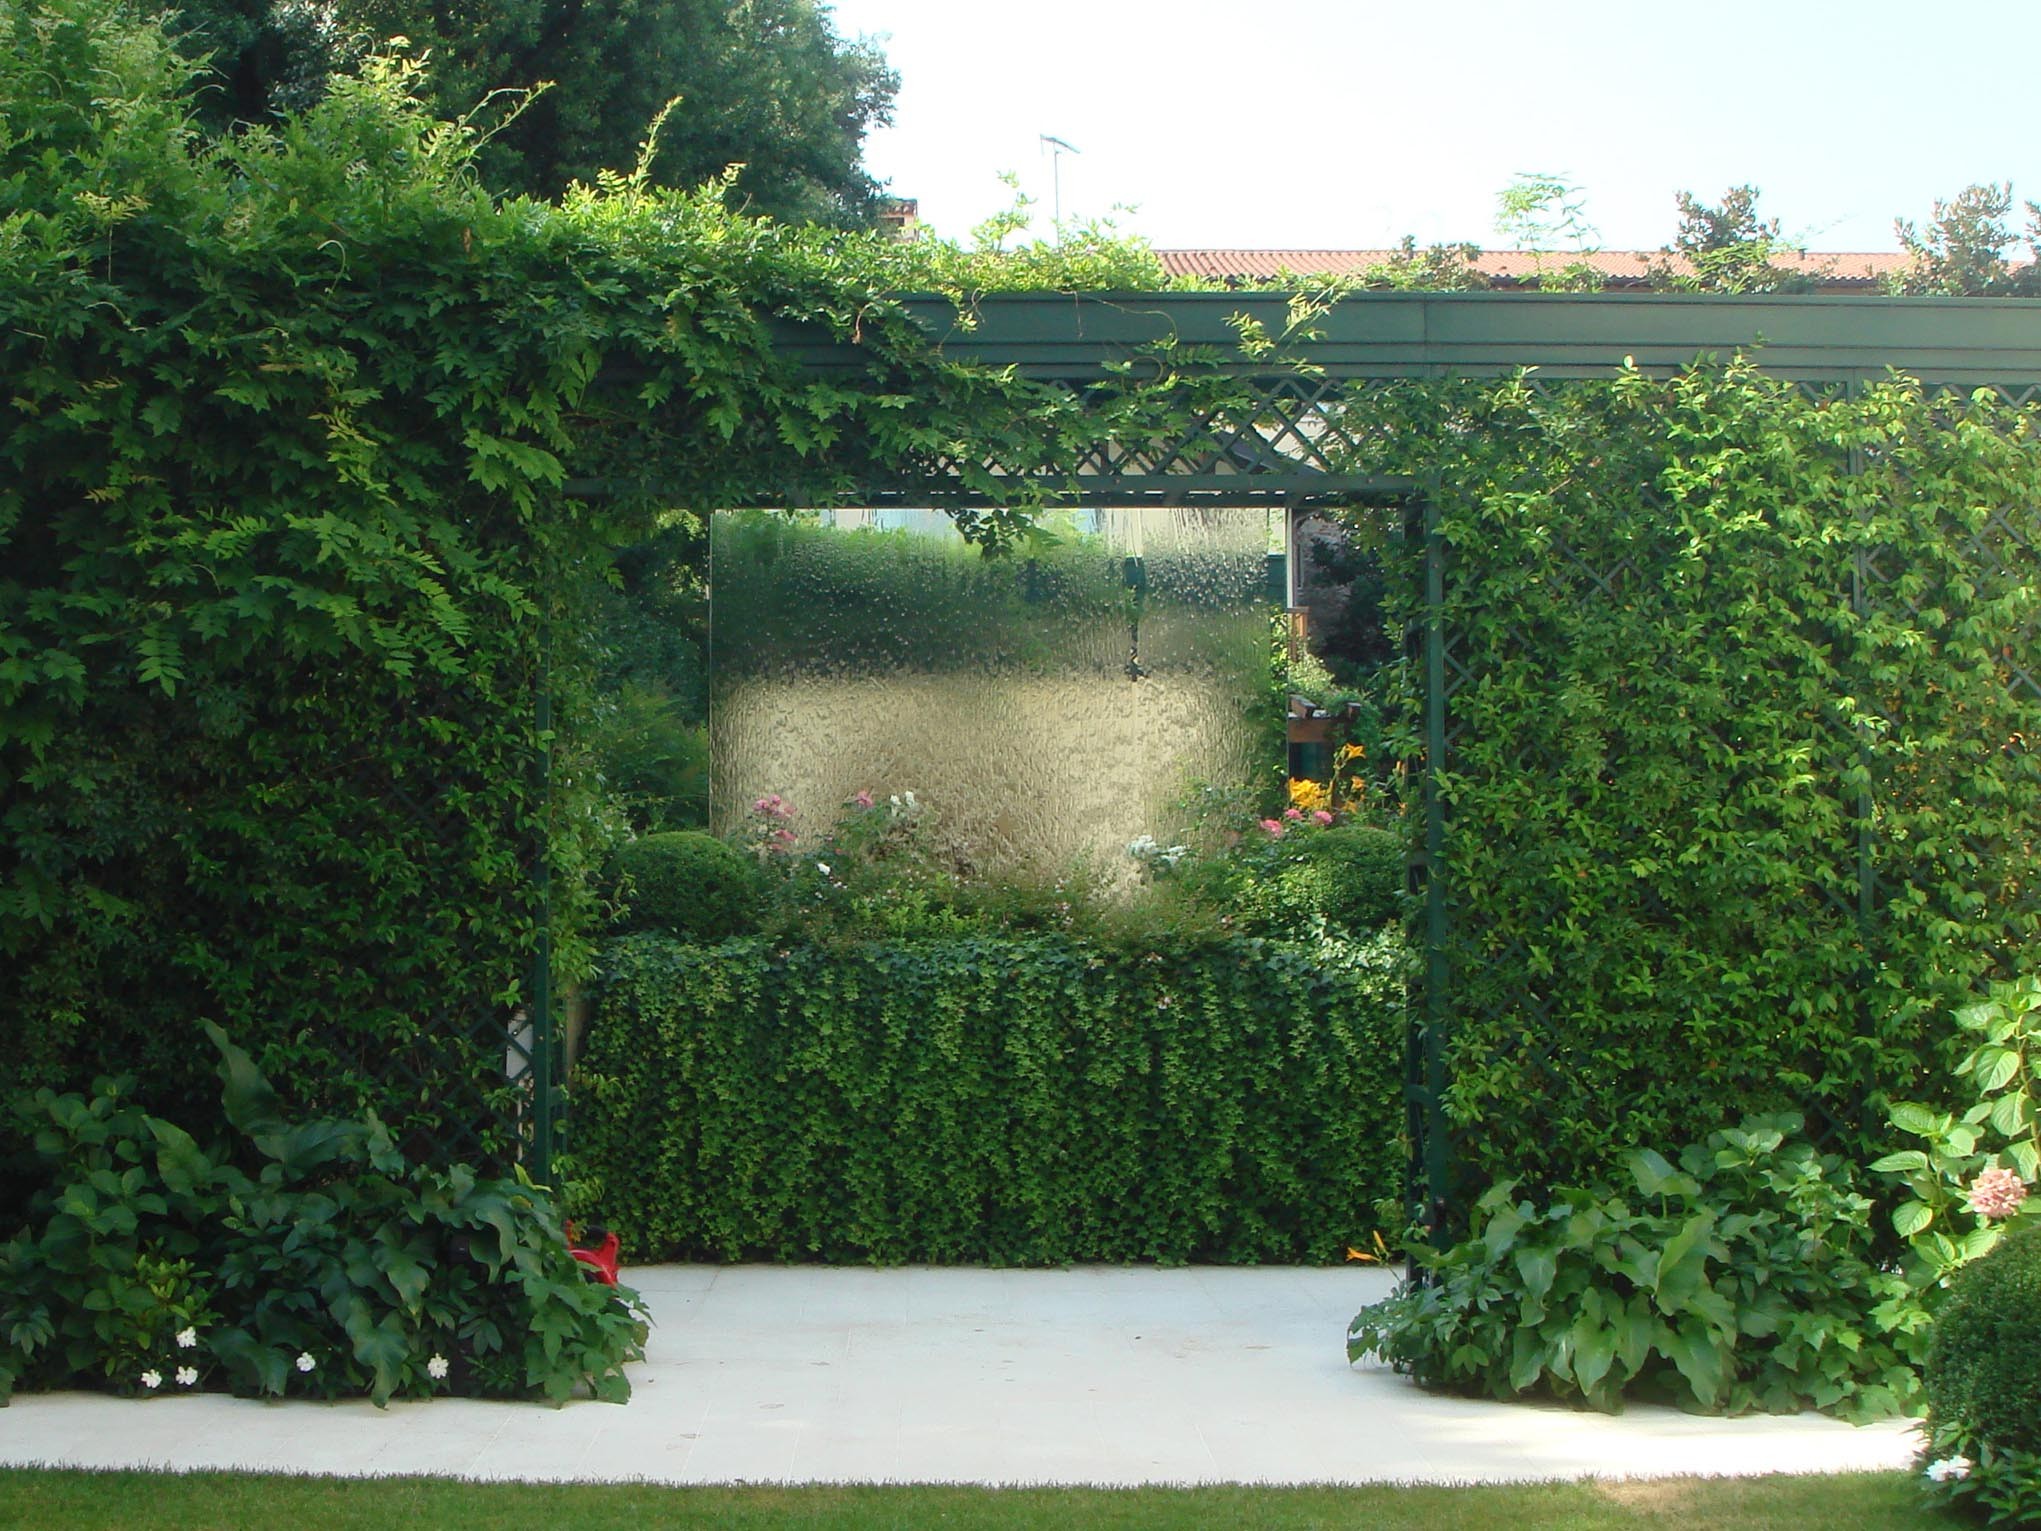 A small, luxuriant green garden retreat - Gardens